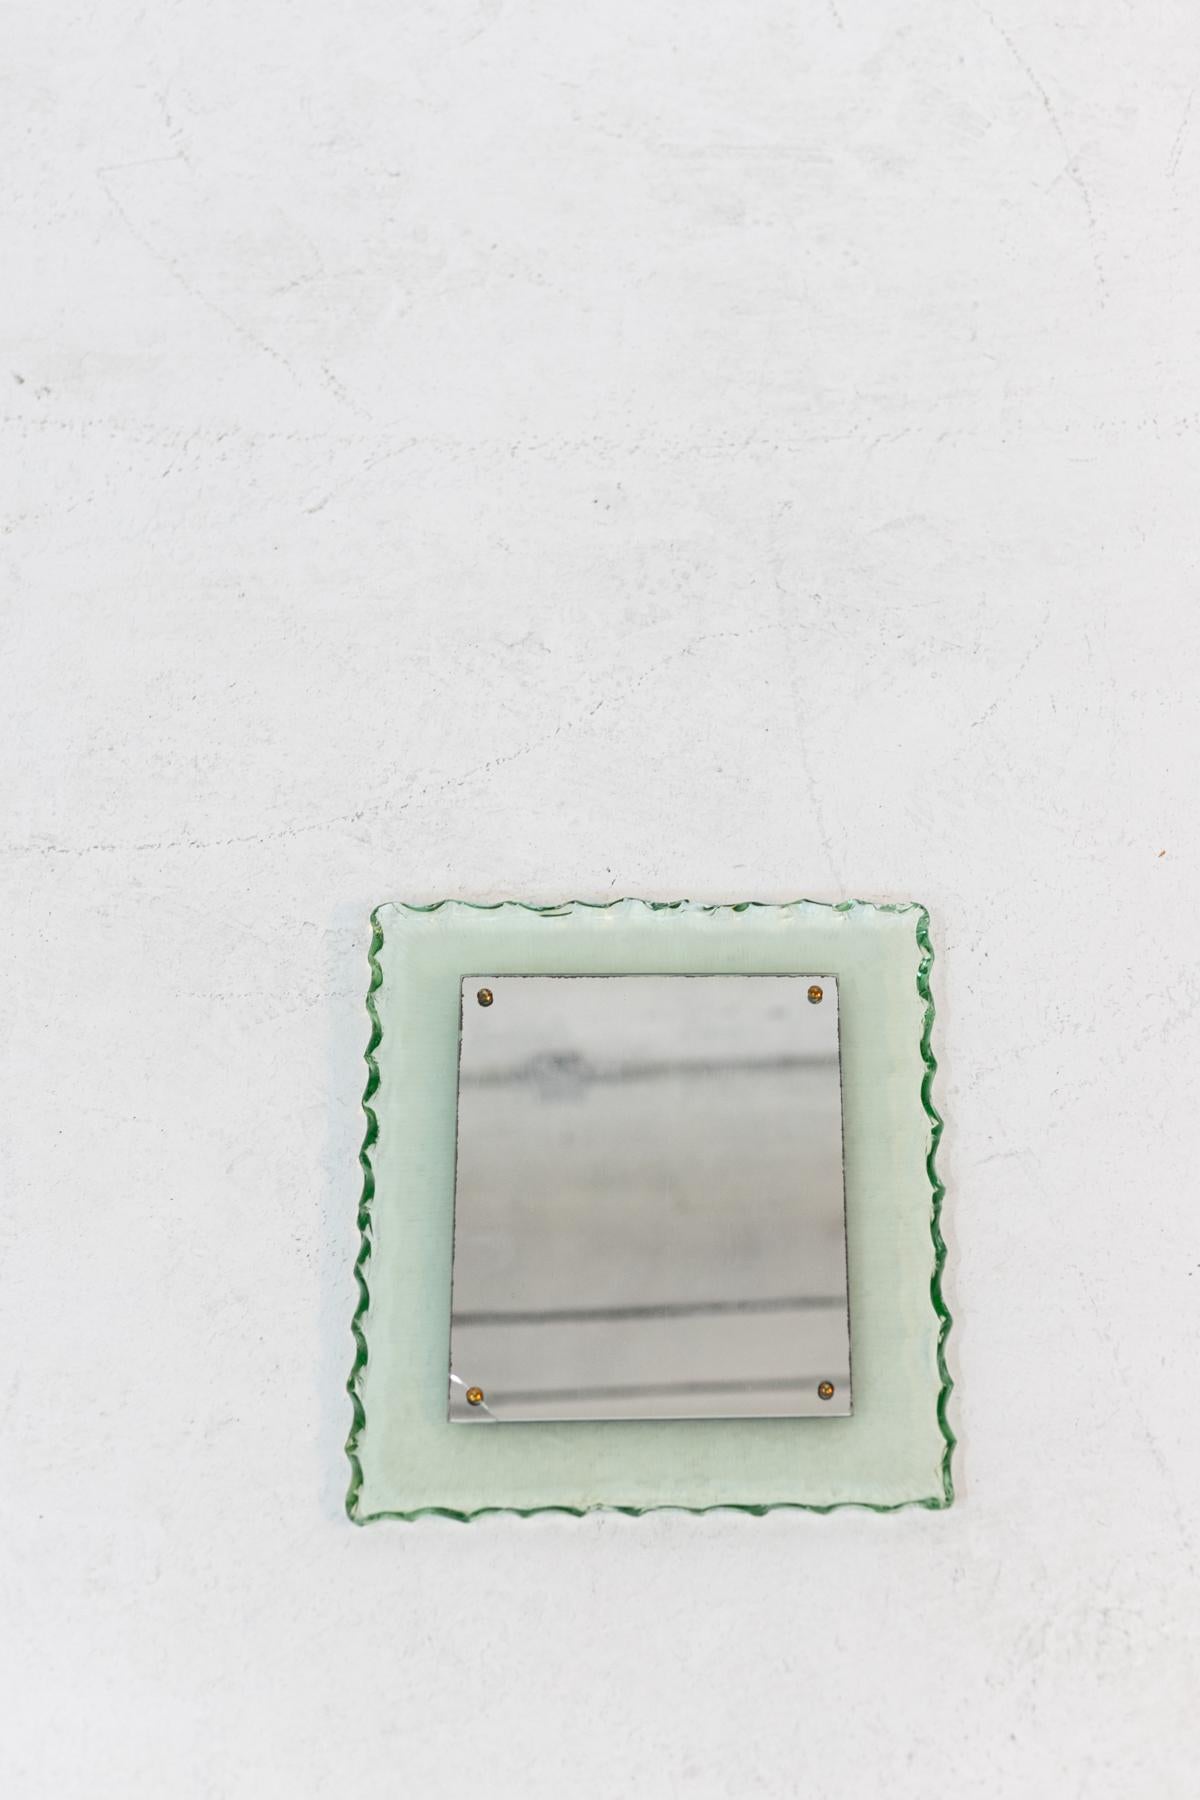 Fontana Arte Wall Mirror by Max Ingrand in Glass 2